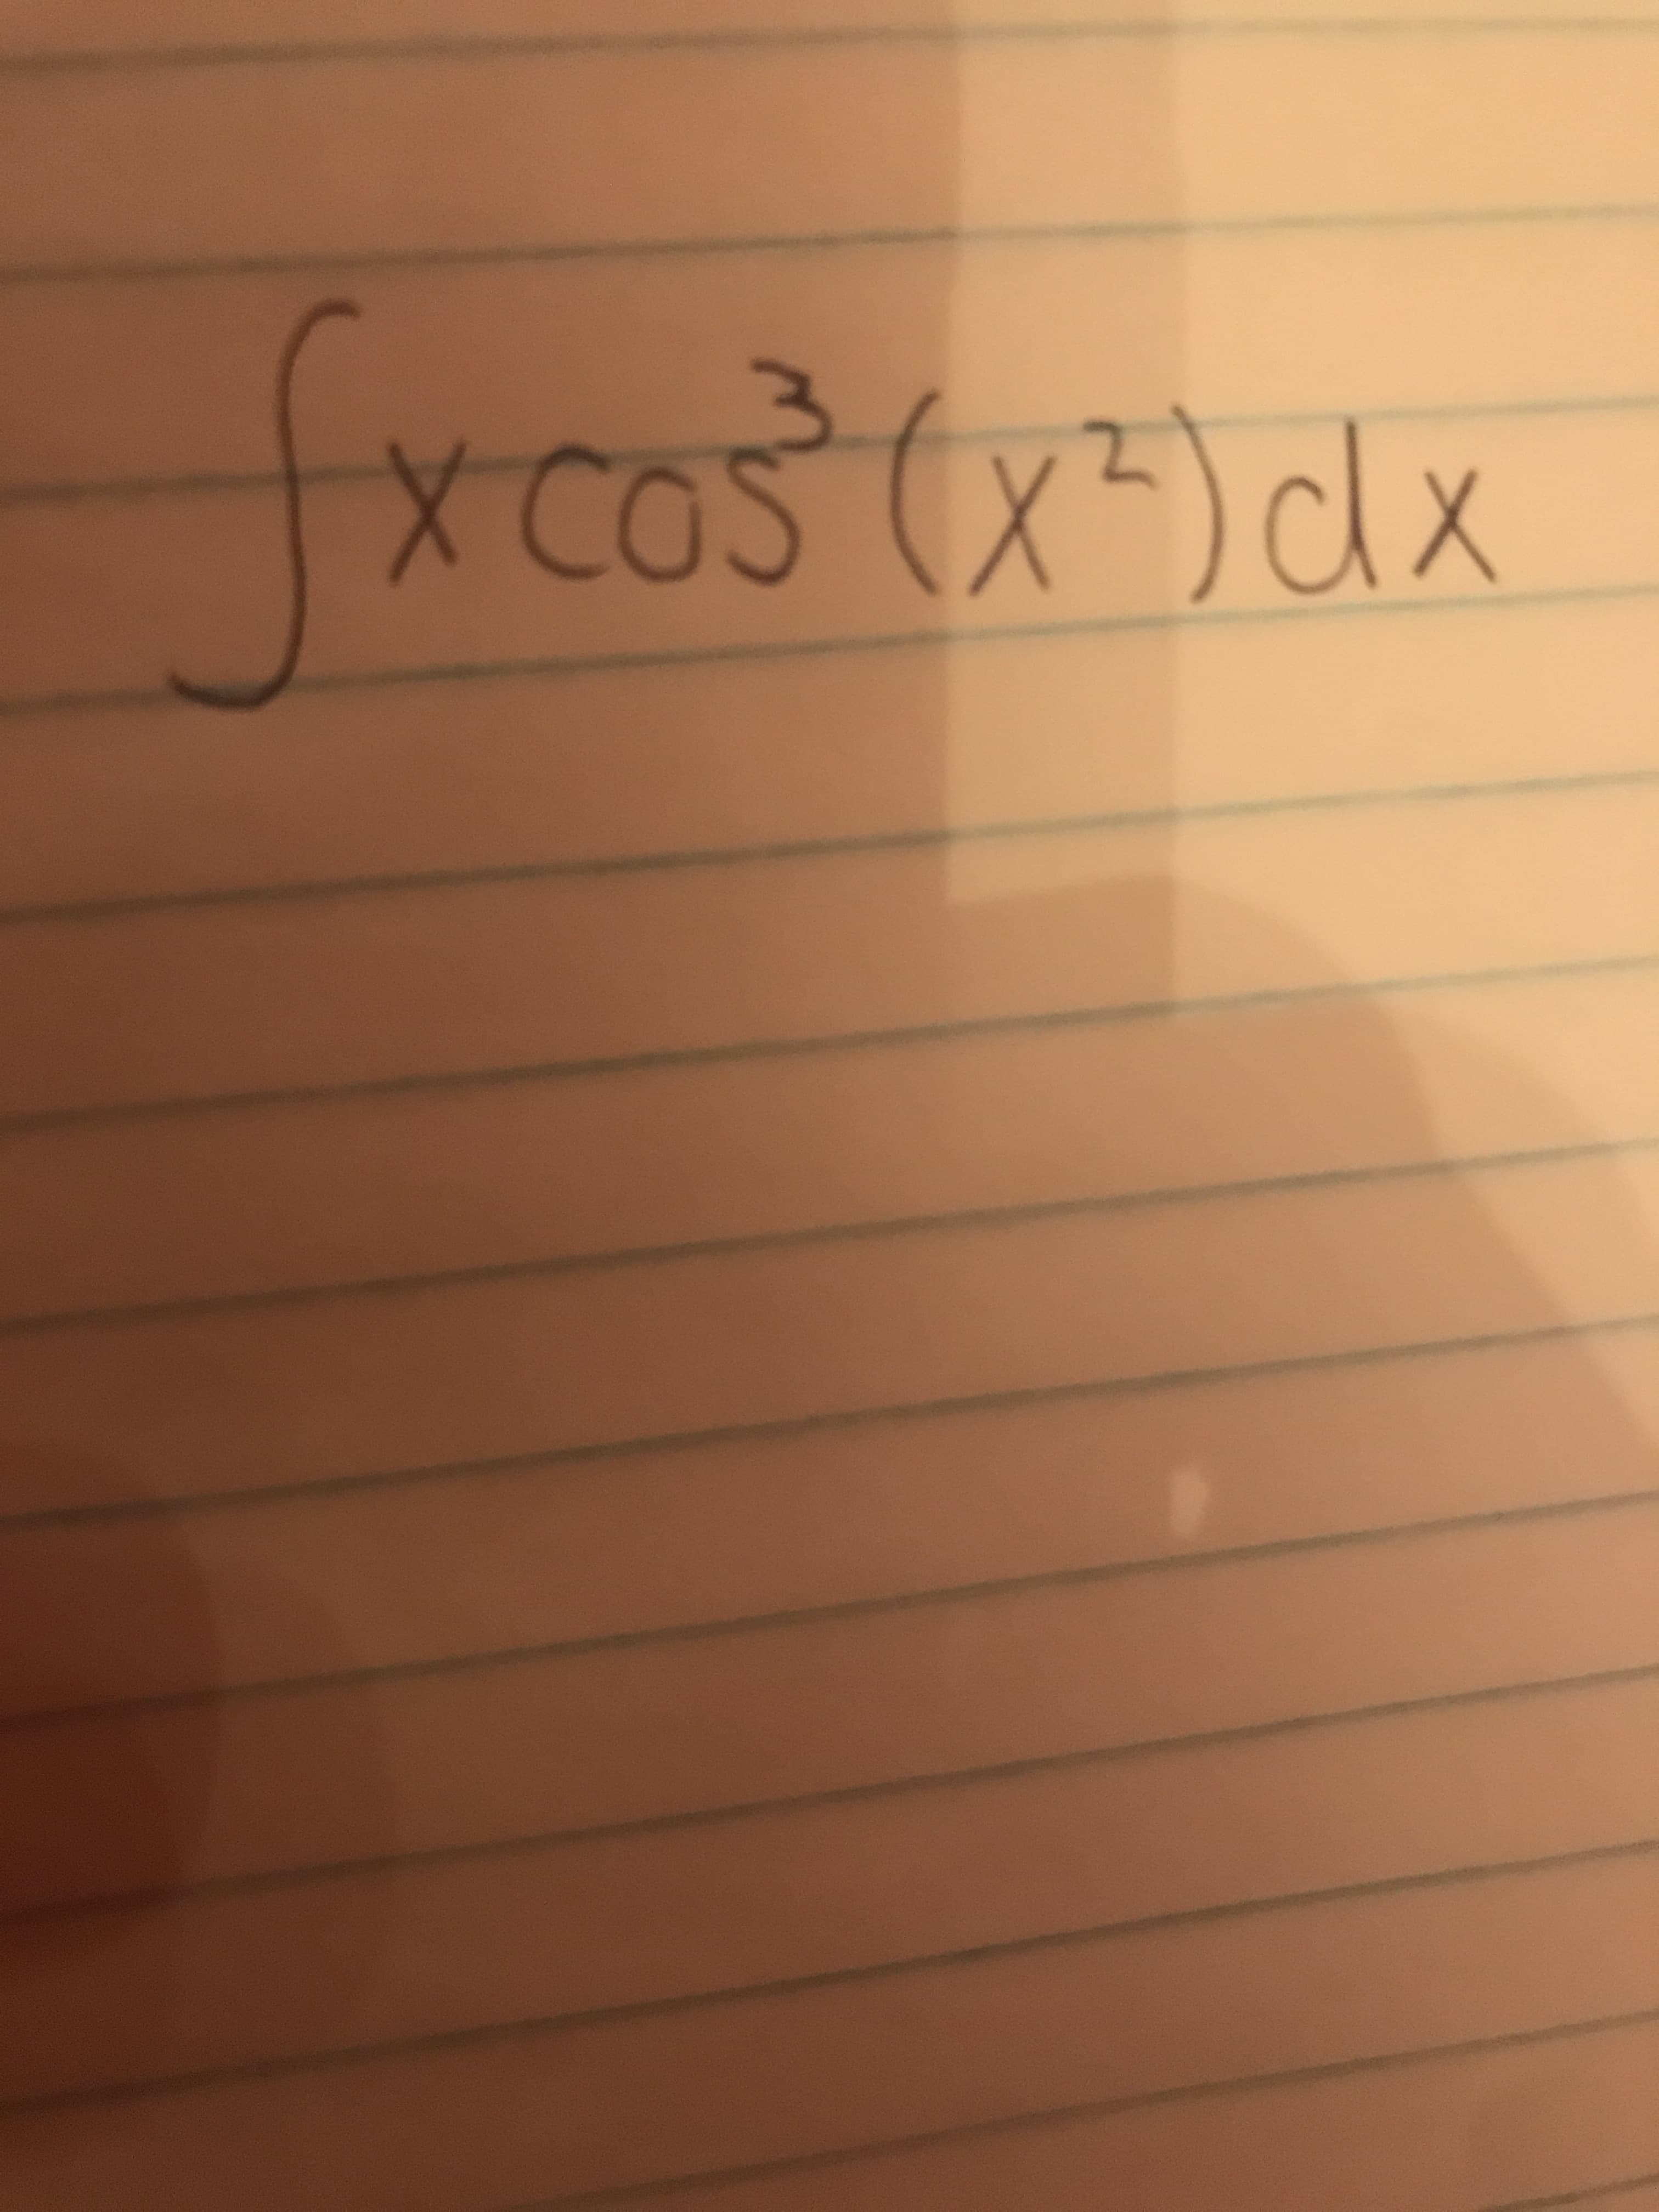 fxcos (x)dx
COS
